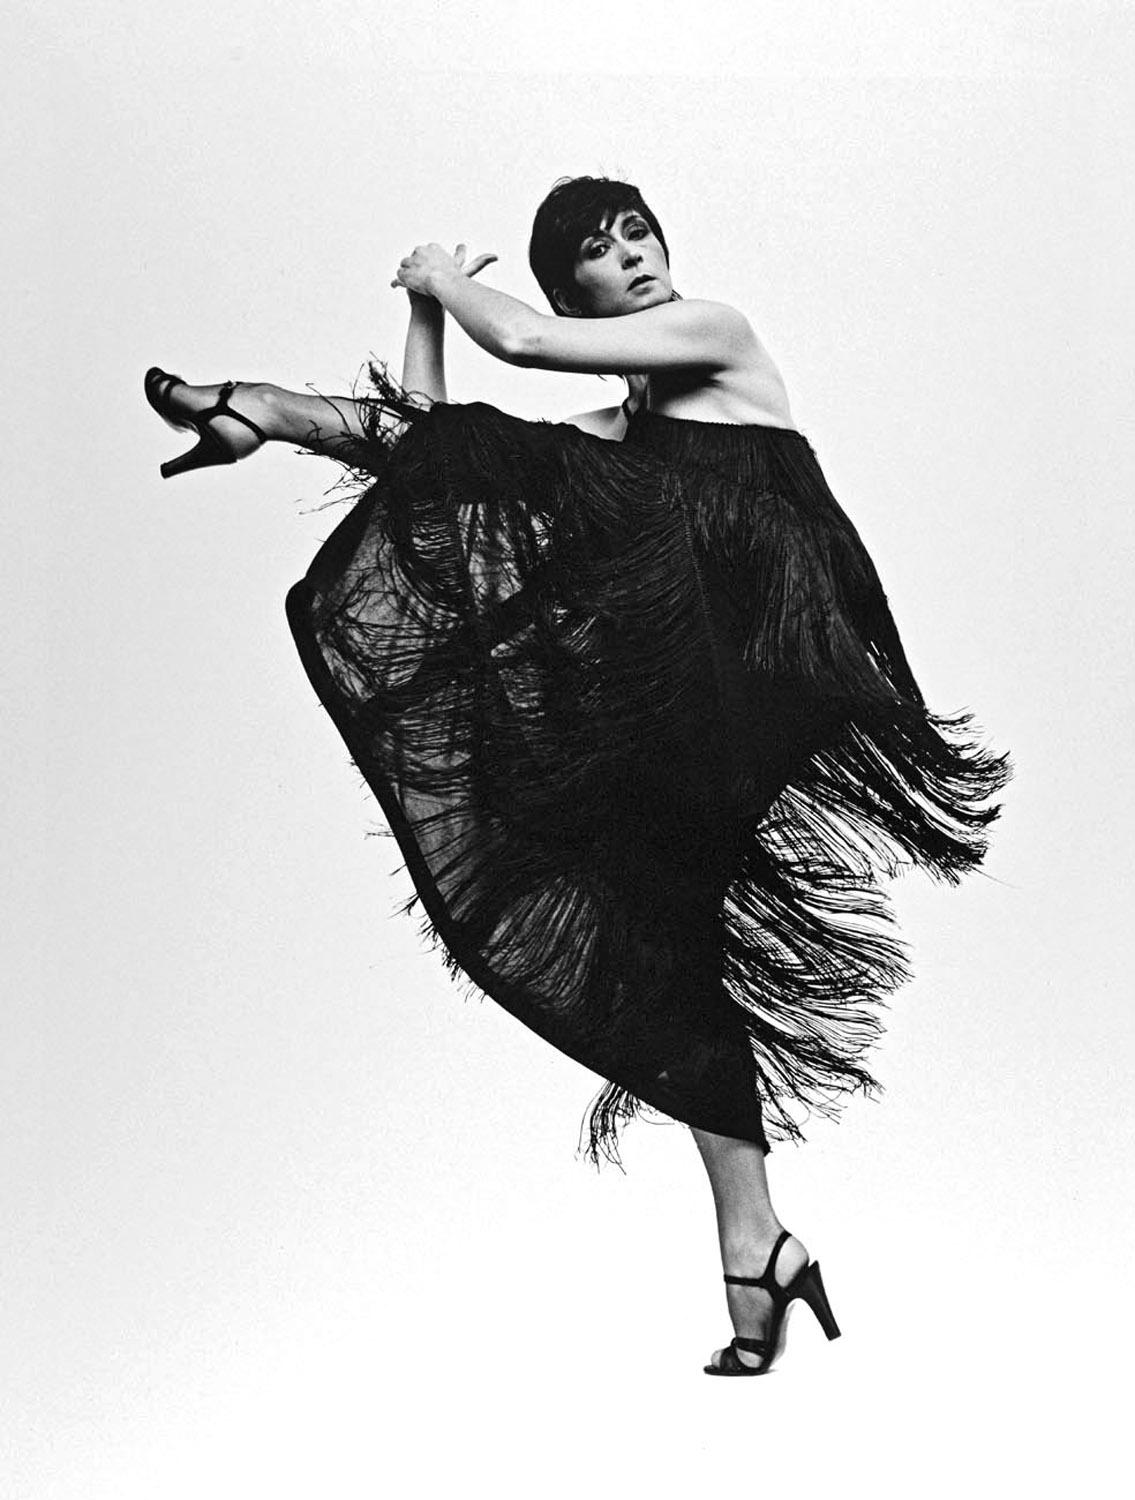 Jack Mitchell Black and White Photograph -  Choreographer/Dancer Twyla Tharp captured in her classic ‘Vida Blue’ pose